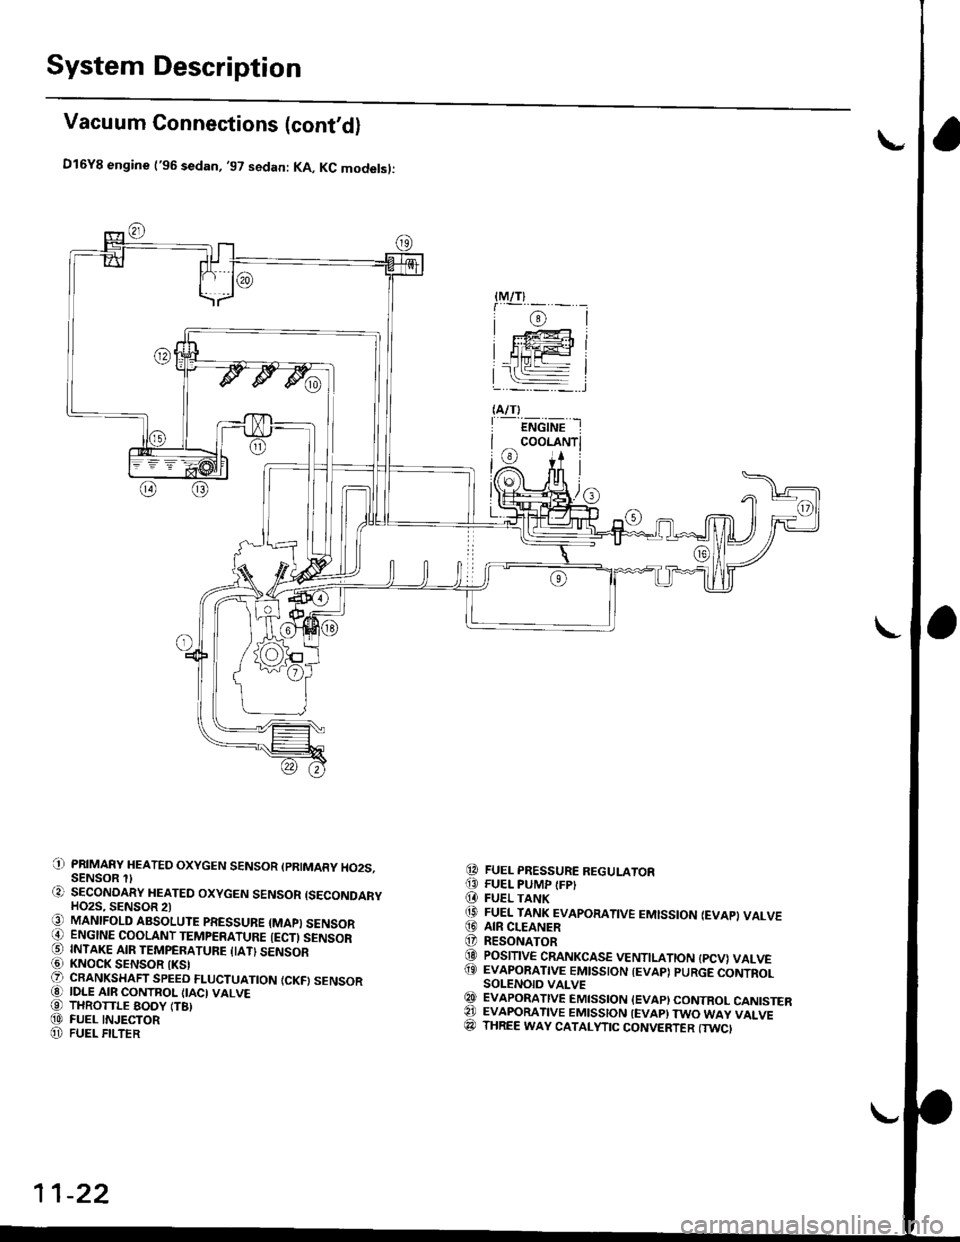 HONDA CIVIC 1996 6.G User Guide System Description
Vacuum Connections (contd)
D16Y8 engine (96 sedan, 97 sedan: KA, KC modelsl:
PRIMARY HEATED OXYGEN SENSOR (PRIMARY HO2S.SENSOR  SECONOARY HEATED OXYGEN SENSOR {SECONDARYHO2S, SEN